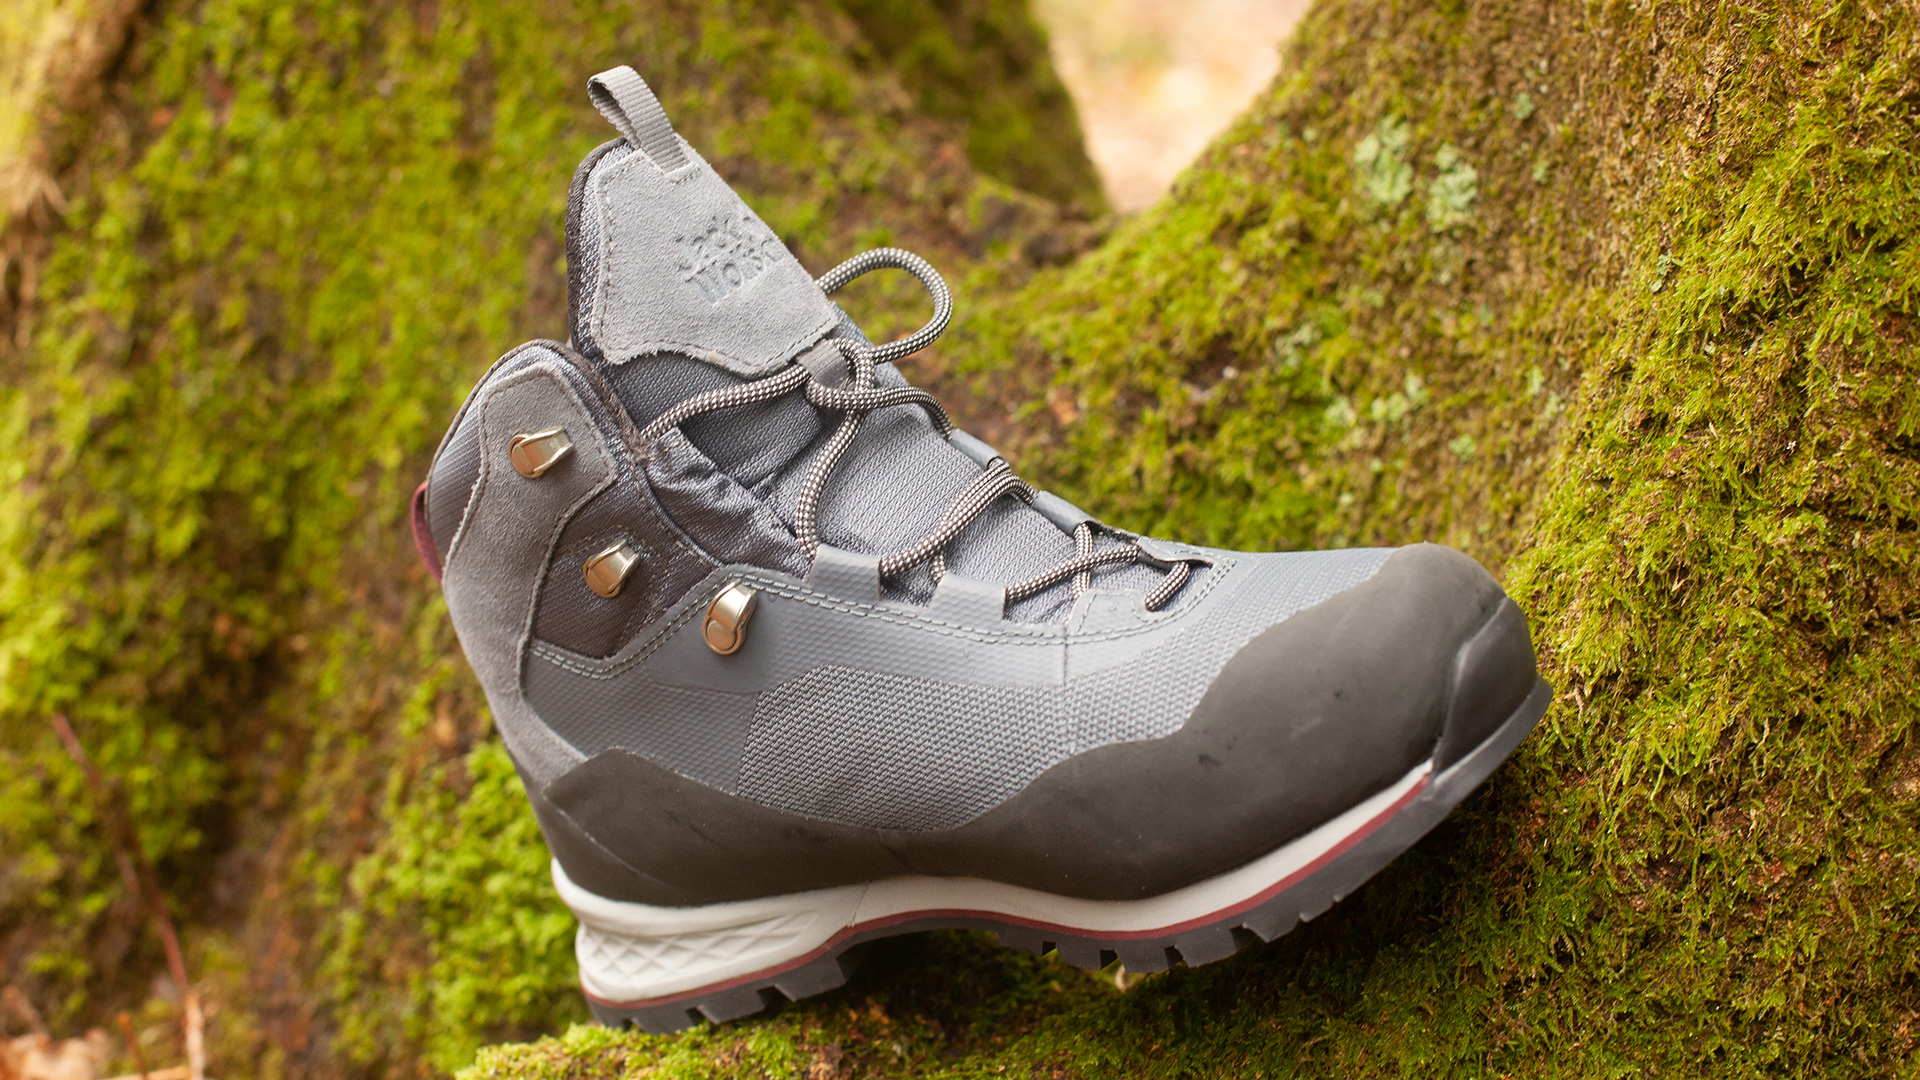 Jack Wolfskin Wilderness Lite hiking boot review | T3